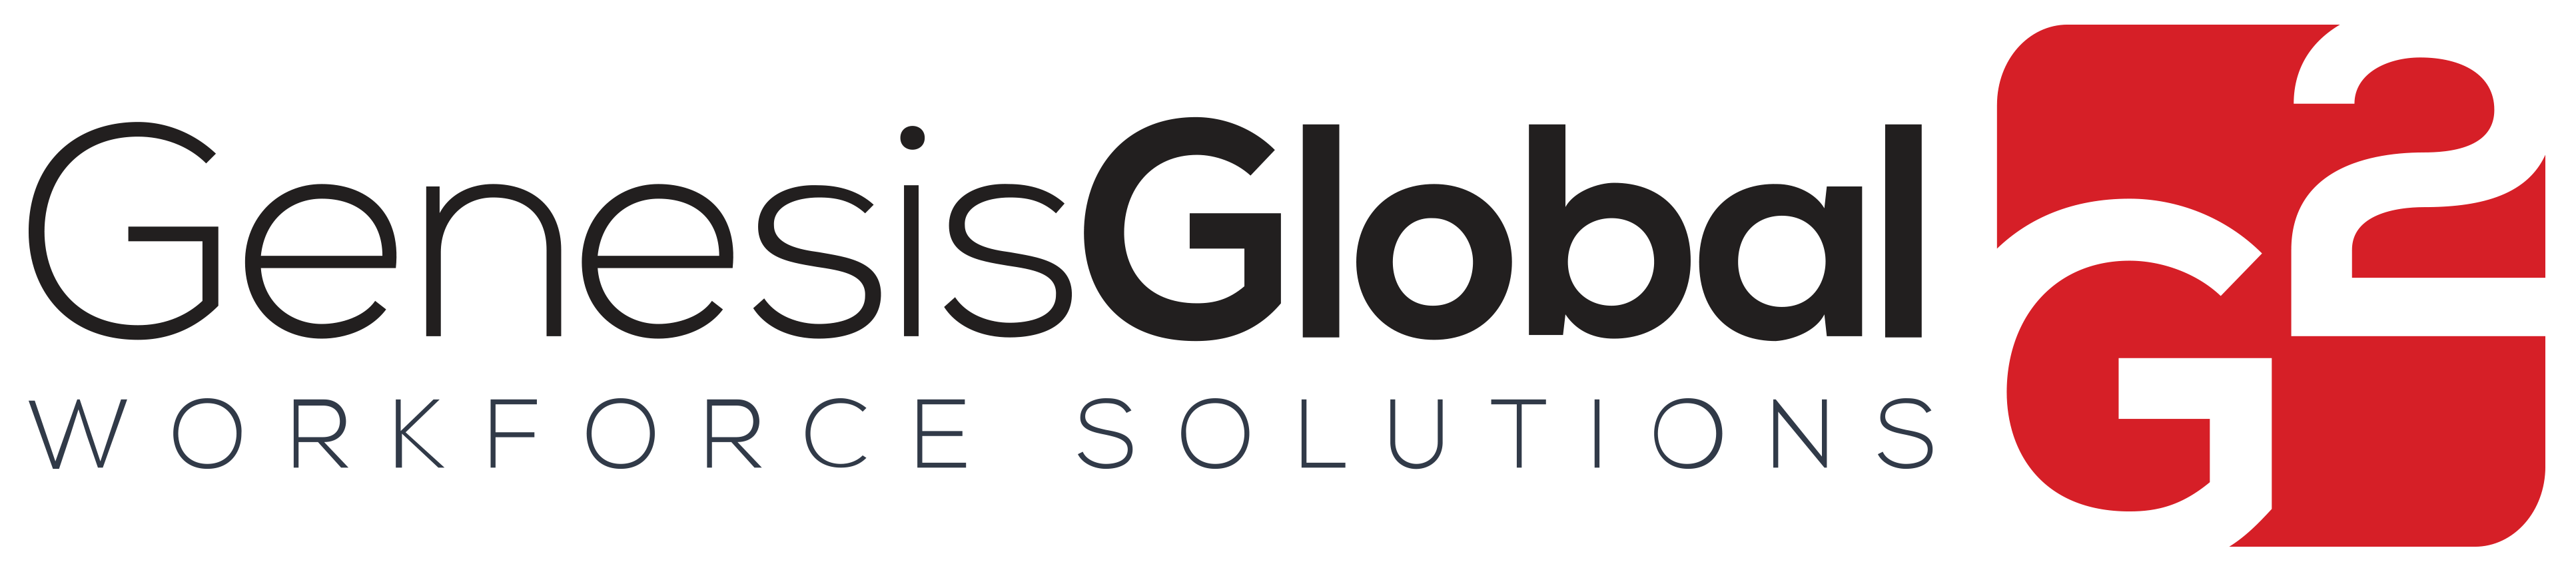 Genesis Global Logo.png